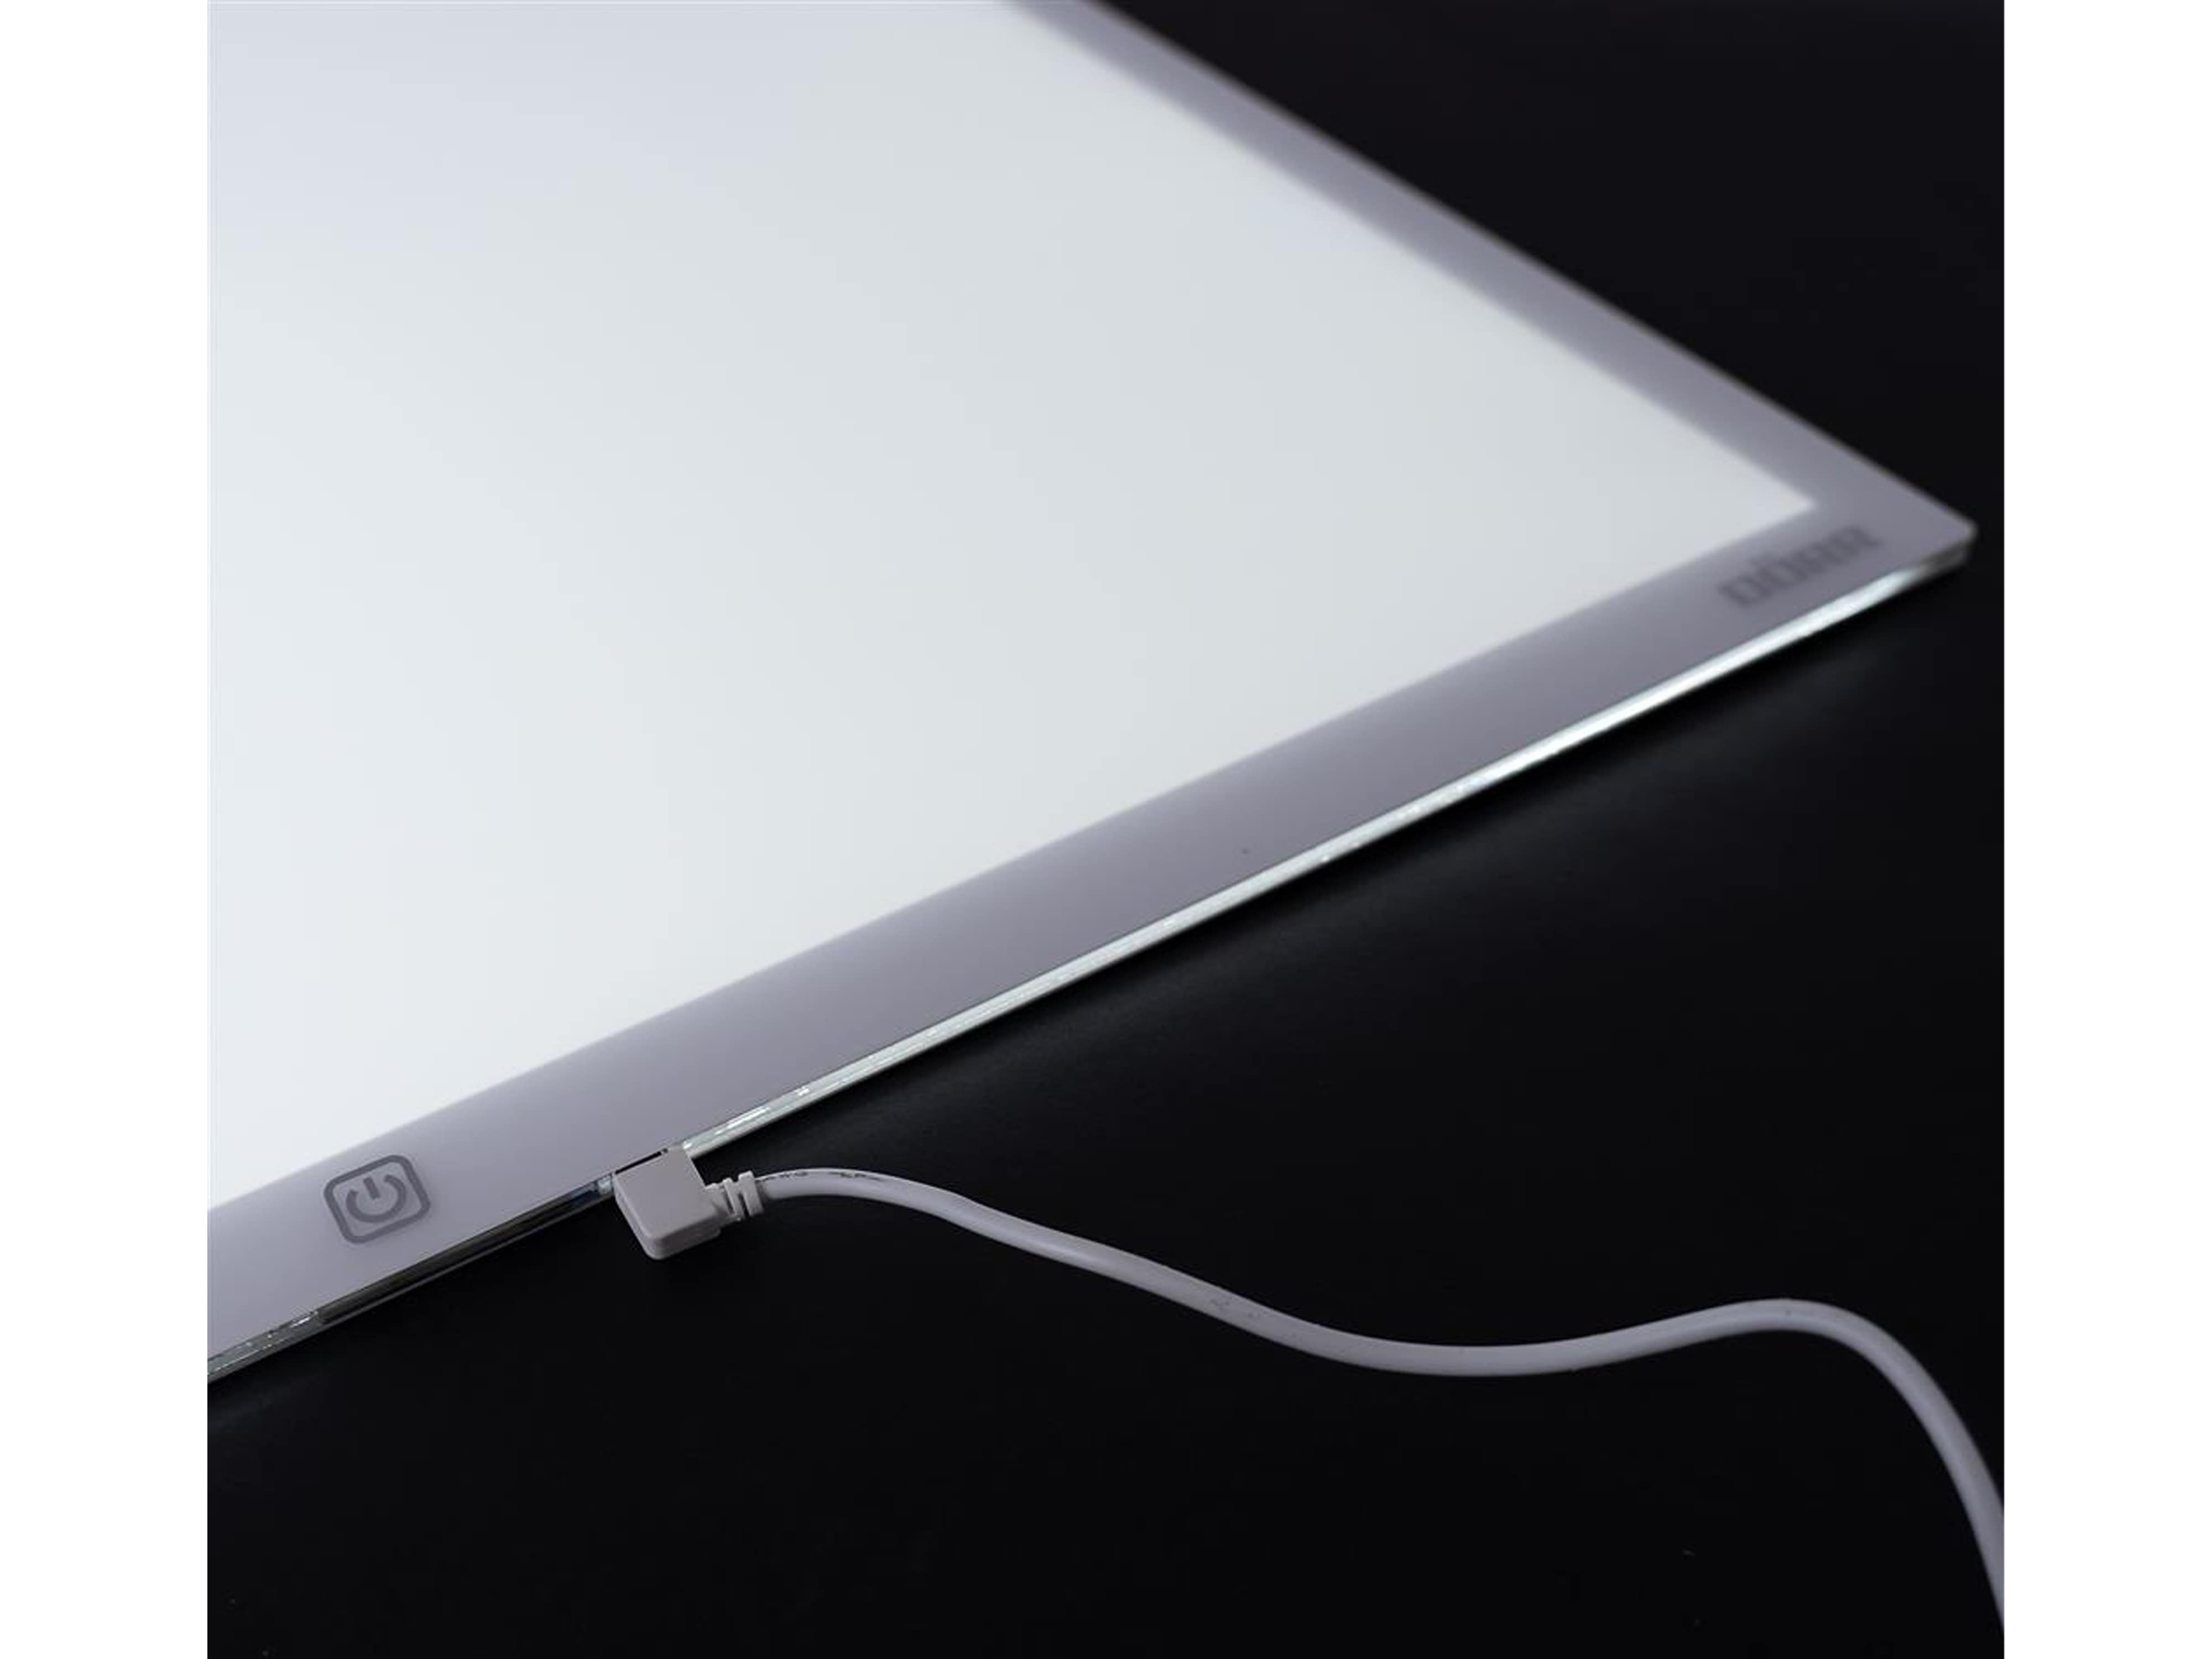 DÖRR LED-Leuchtplatte Light Tablet Ultra Slim LT-2020, weiß